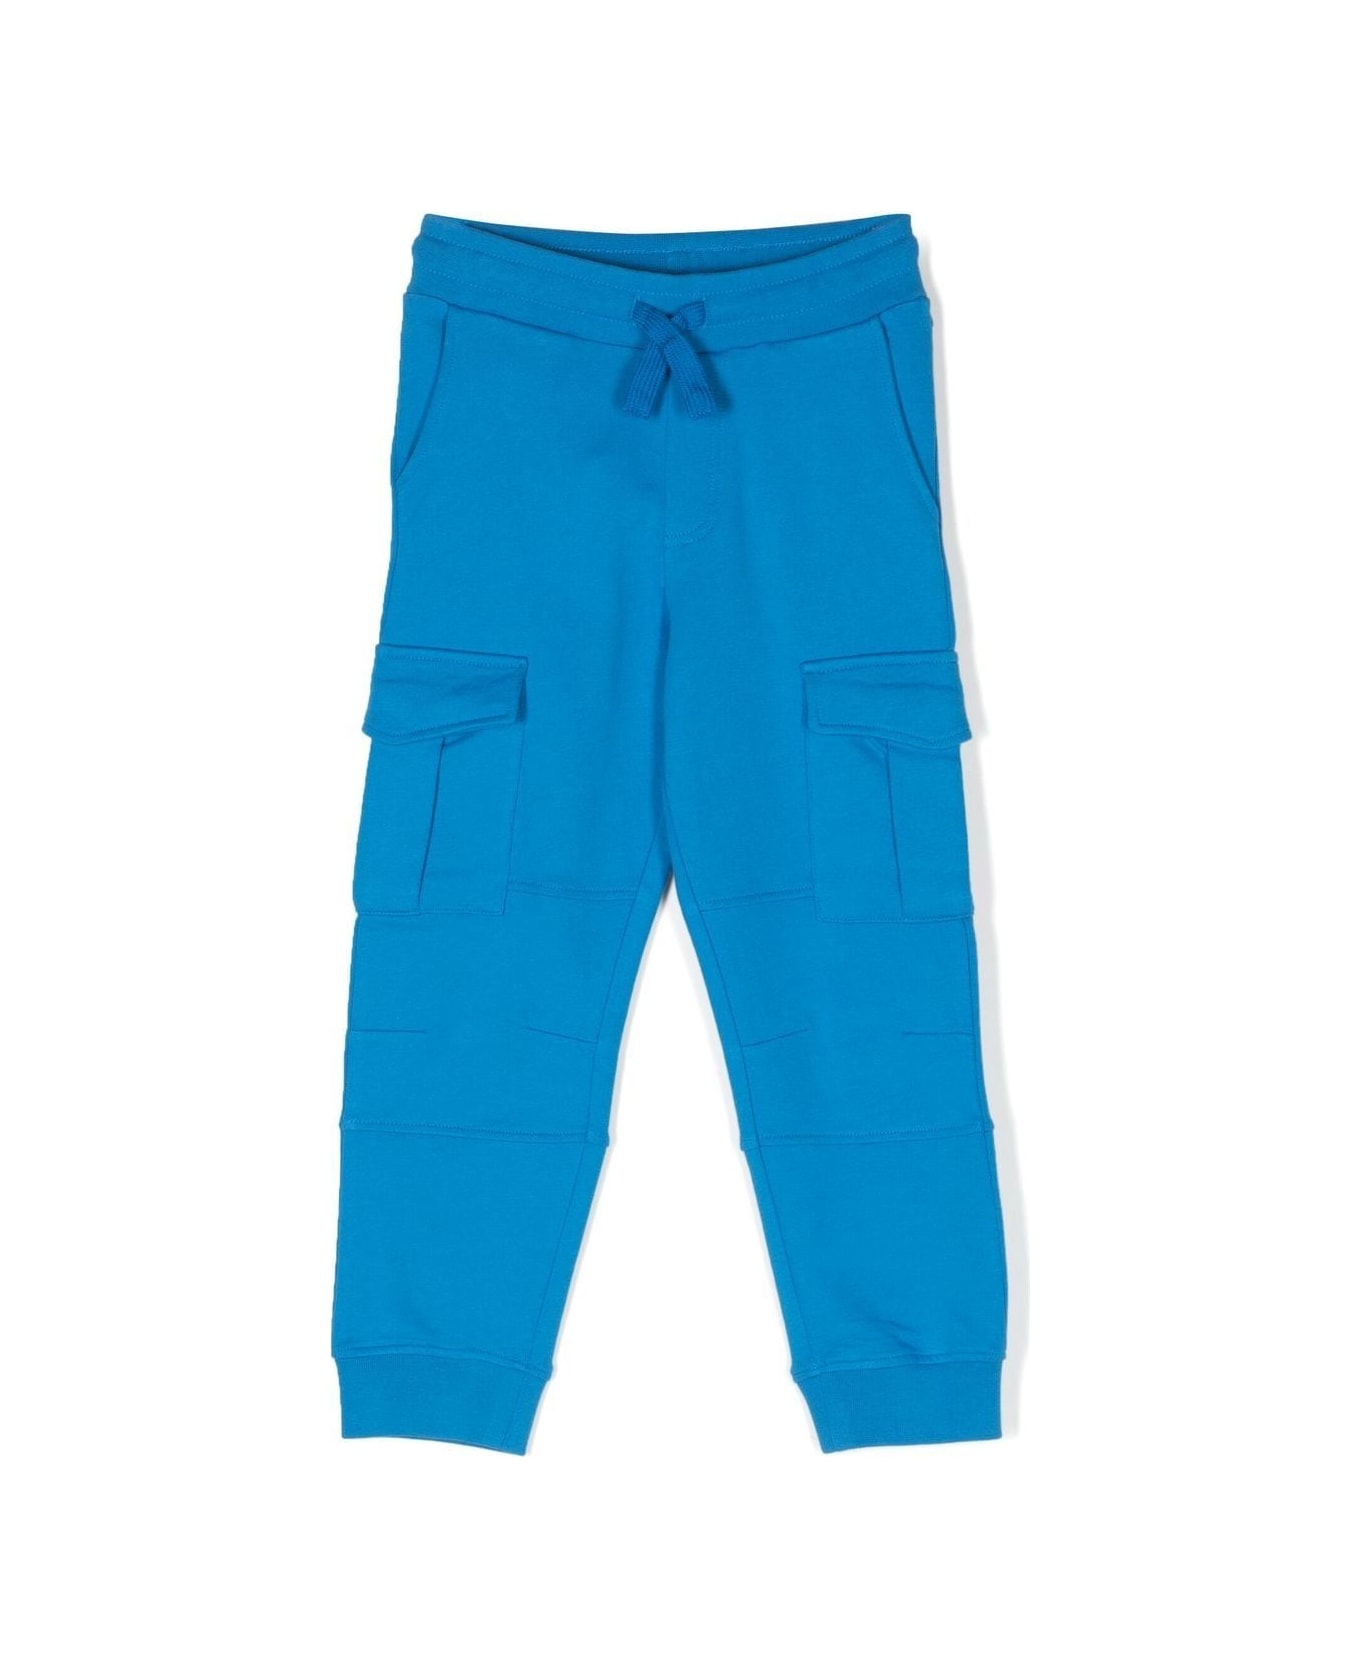 Stella McCartney Blue Cotton Pants - AZURE/BLUE